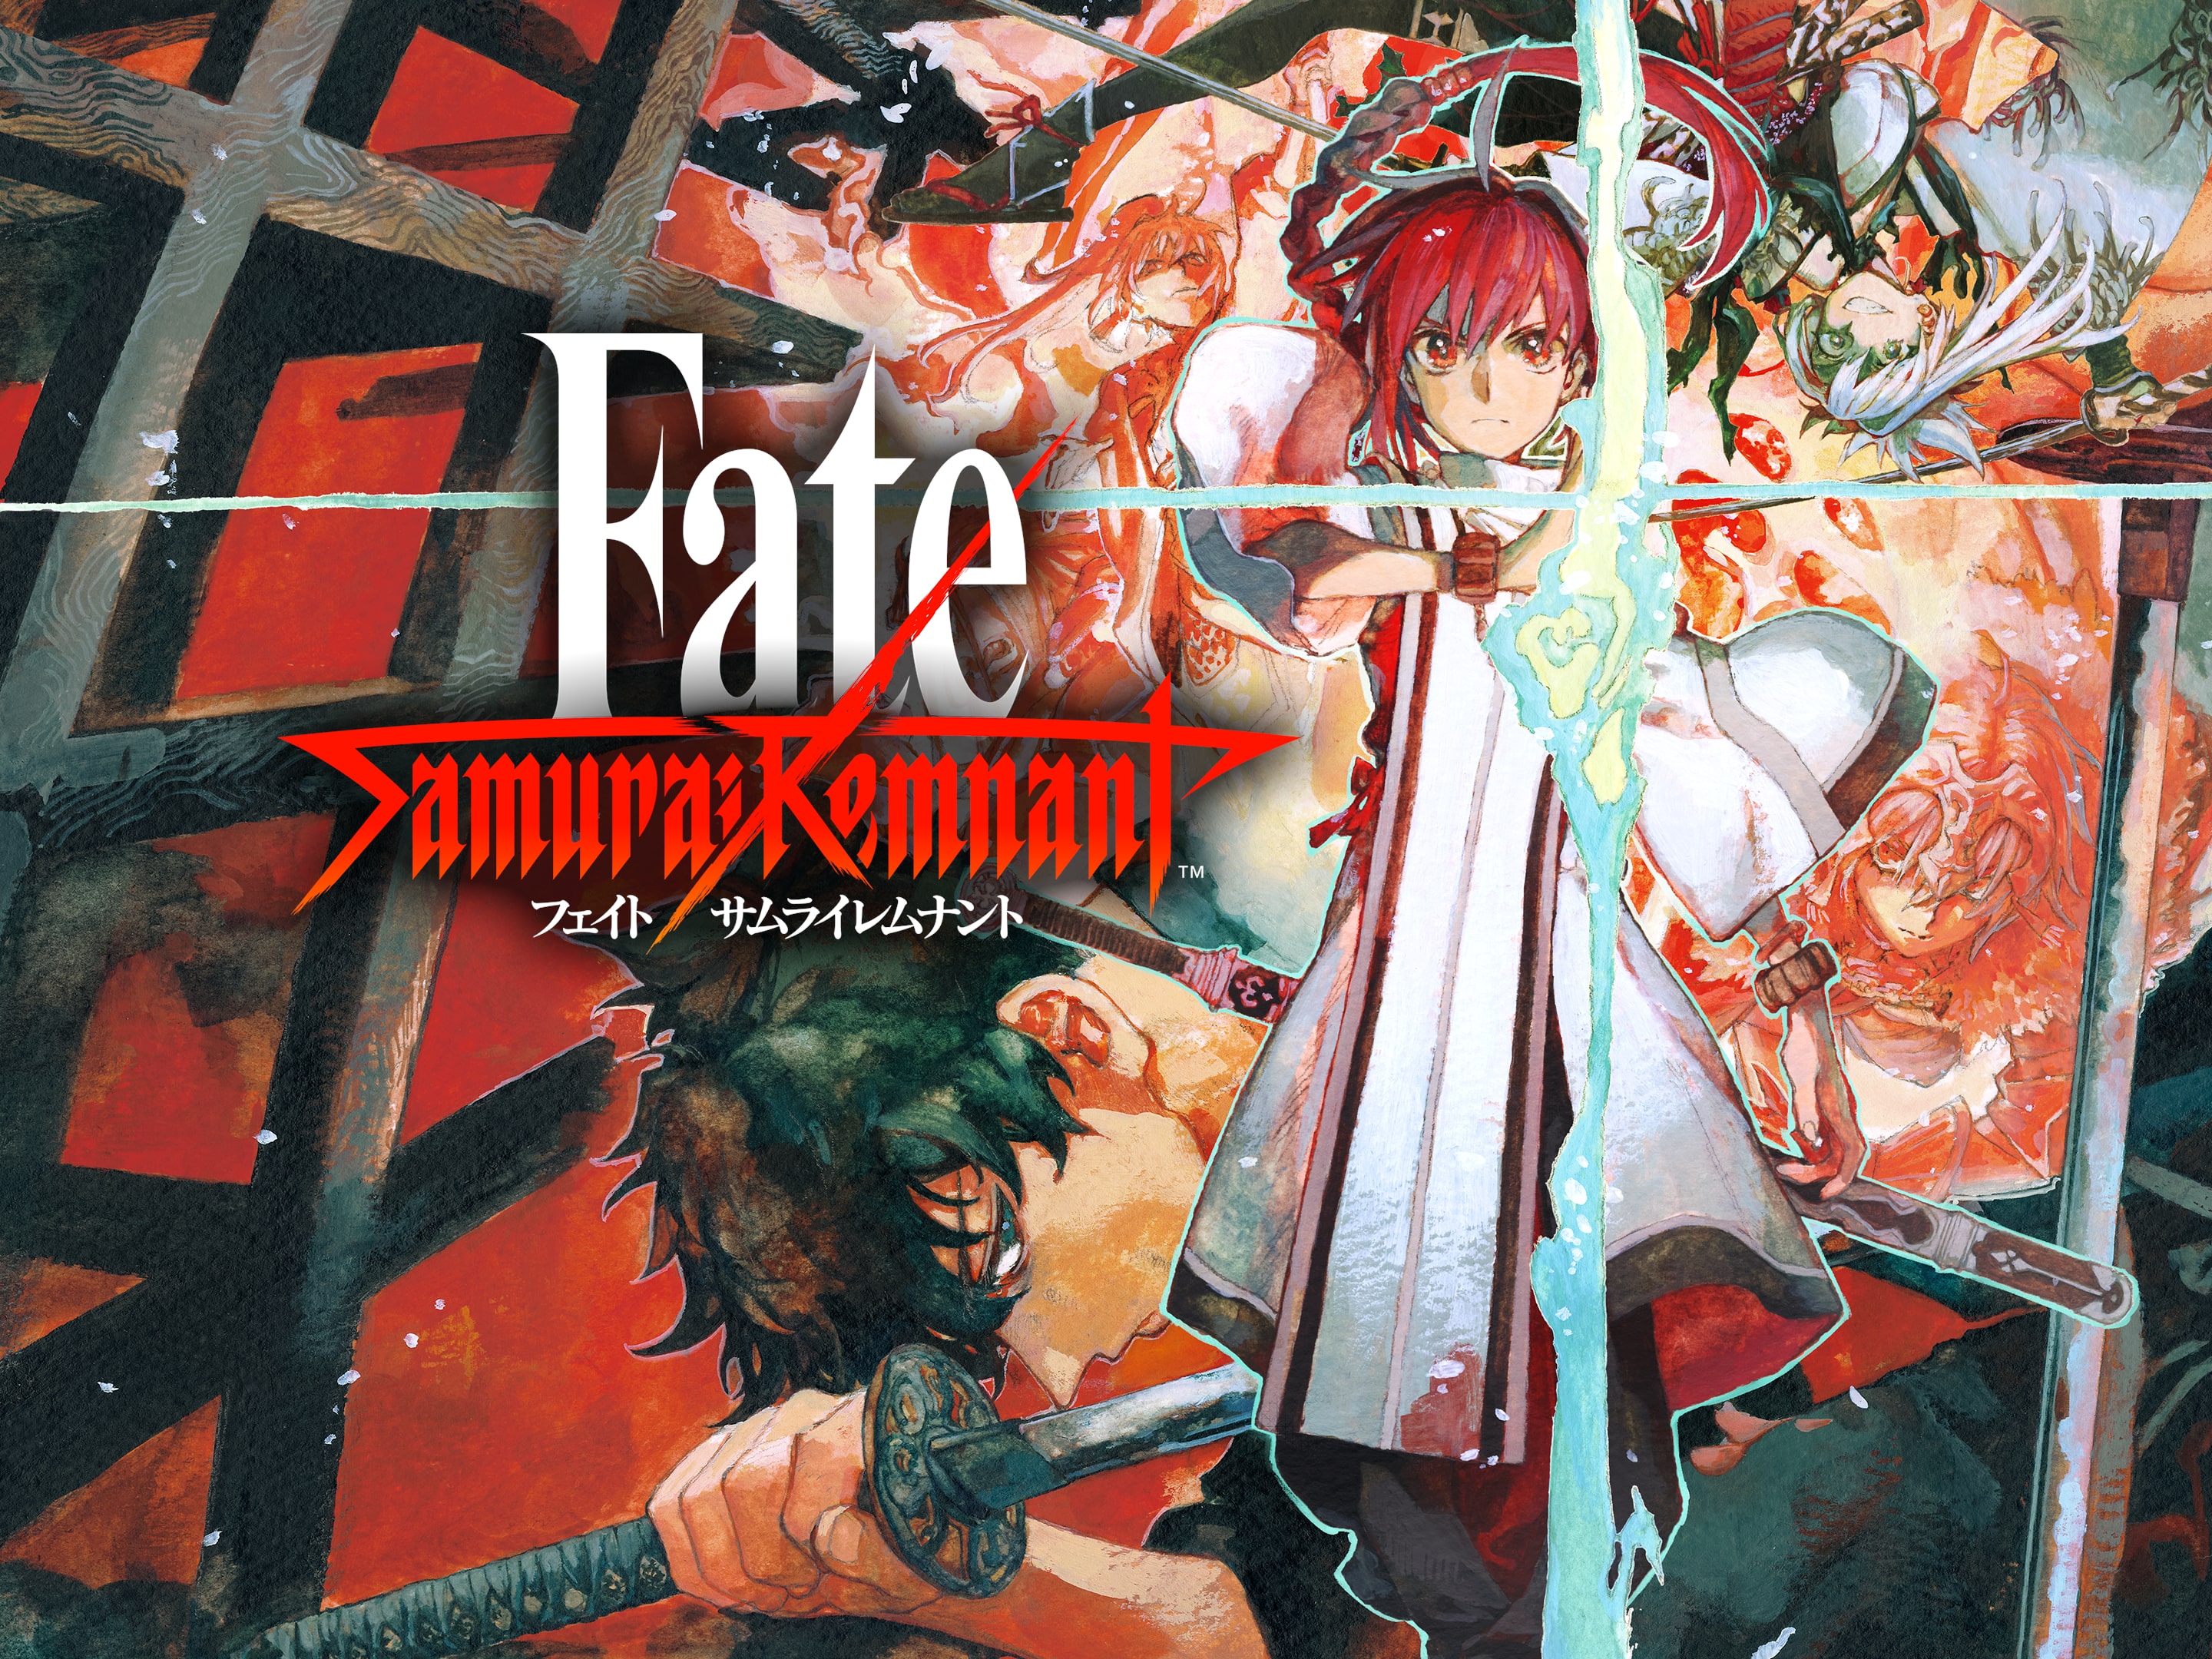 Fate/Samurai Remnant フェイト/サムライレムナント PS4版